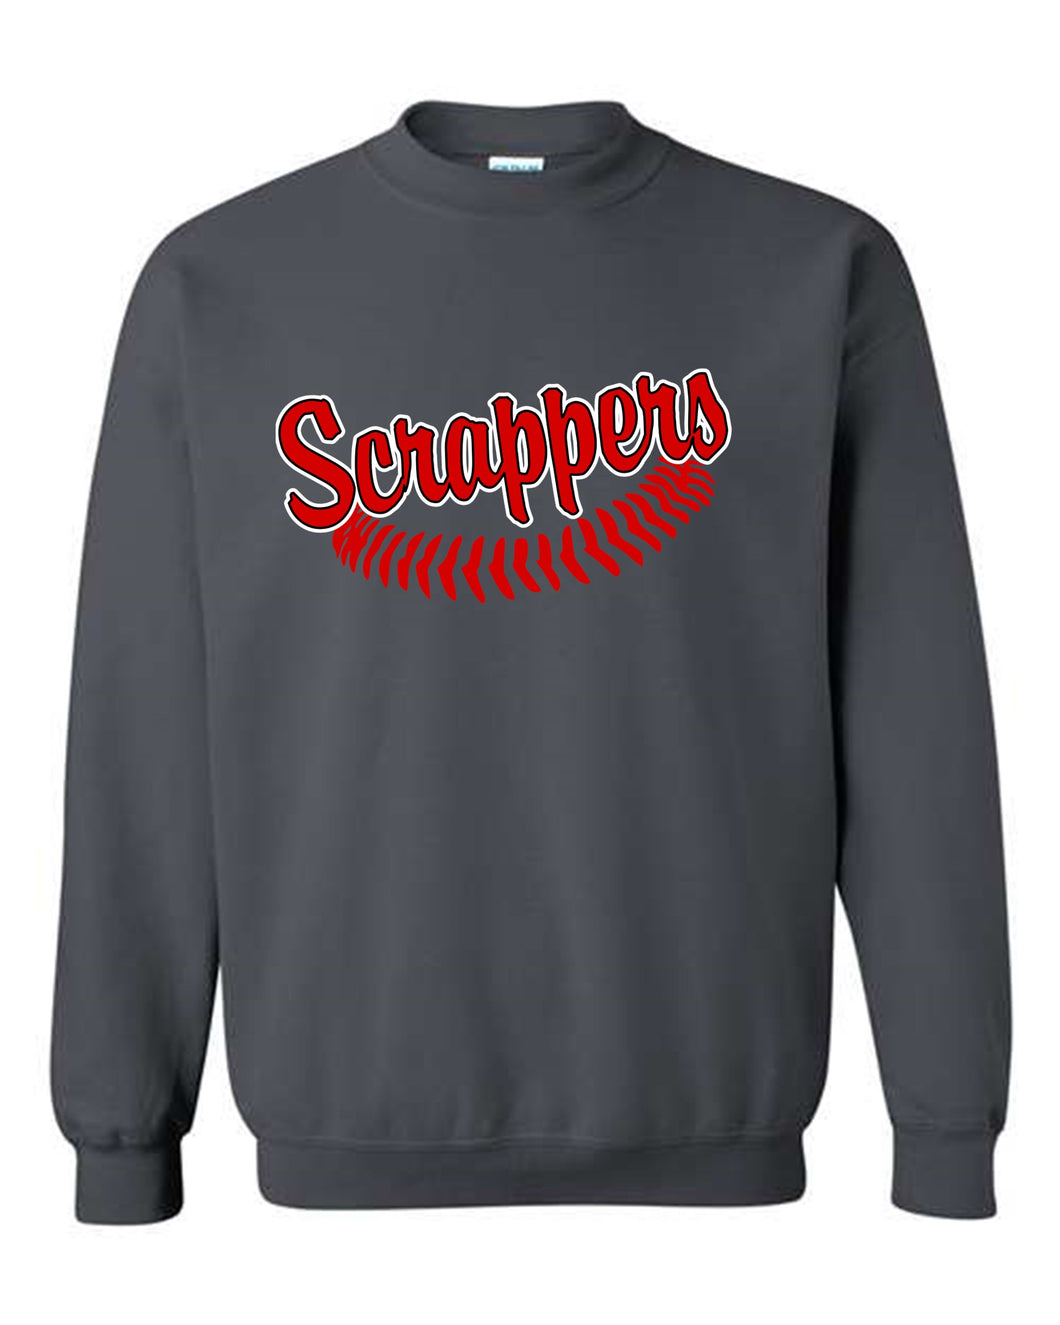 Scrappers Baseball Crewneck Sweatshirt - Youth and Adult